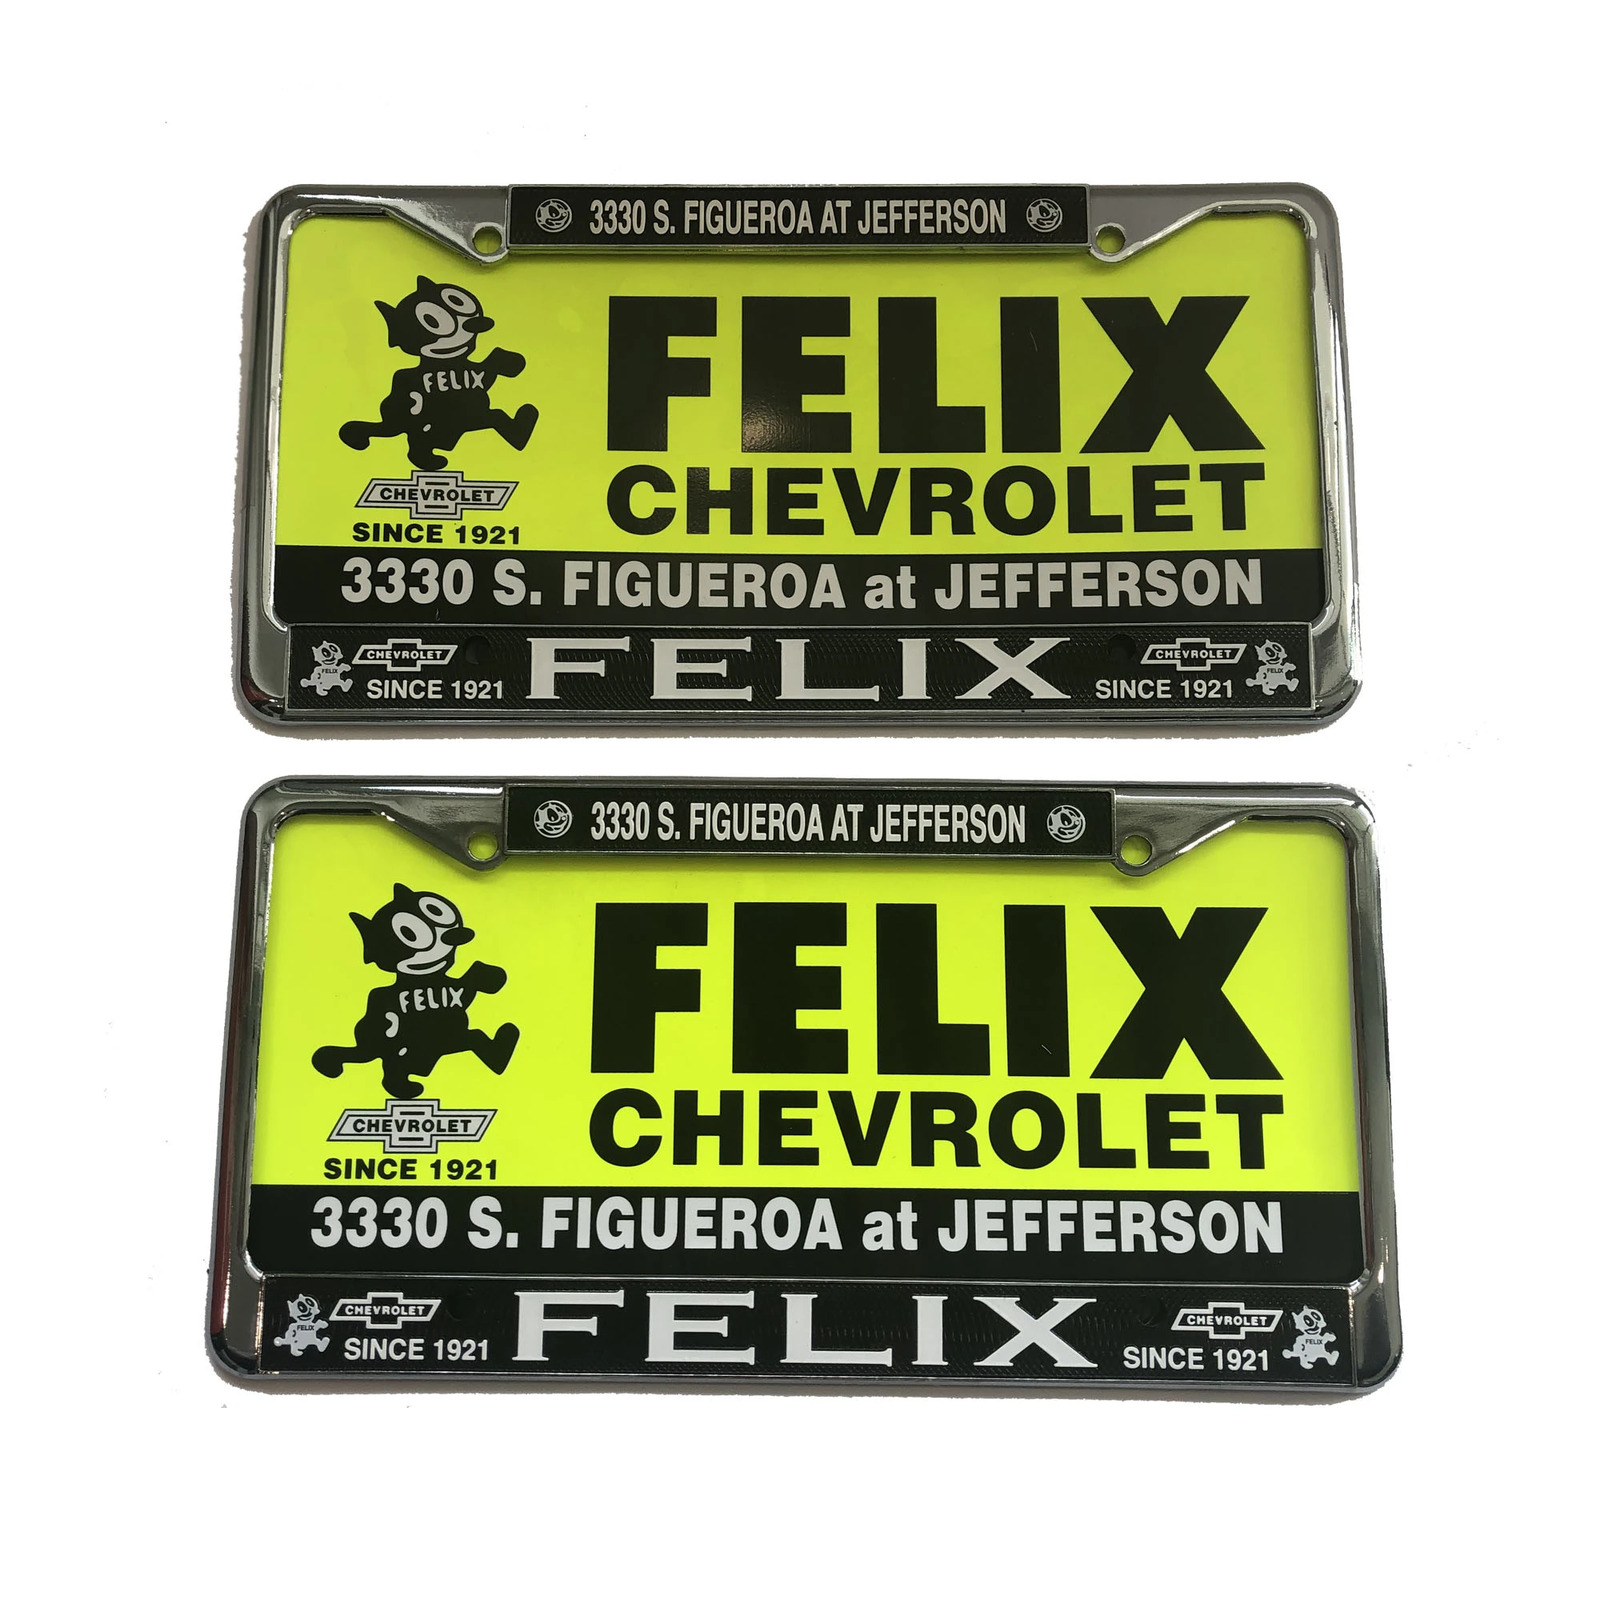 Felix Chevrolet Plastic License Plate Set of 2 (2 Plastic Frames and 2 Inserts)